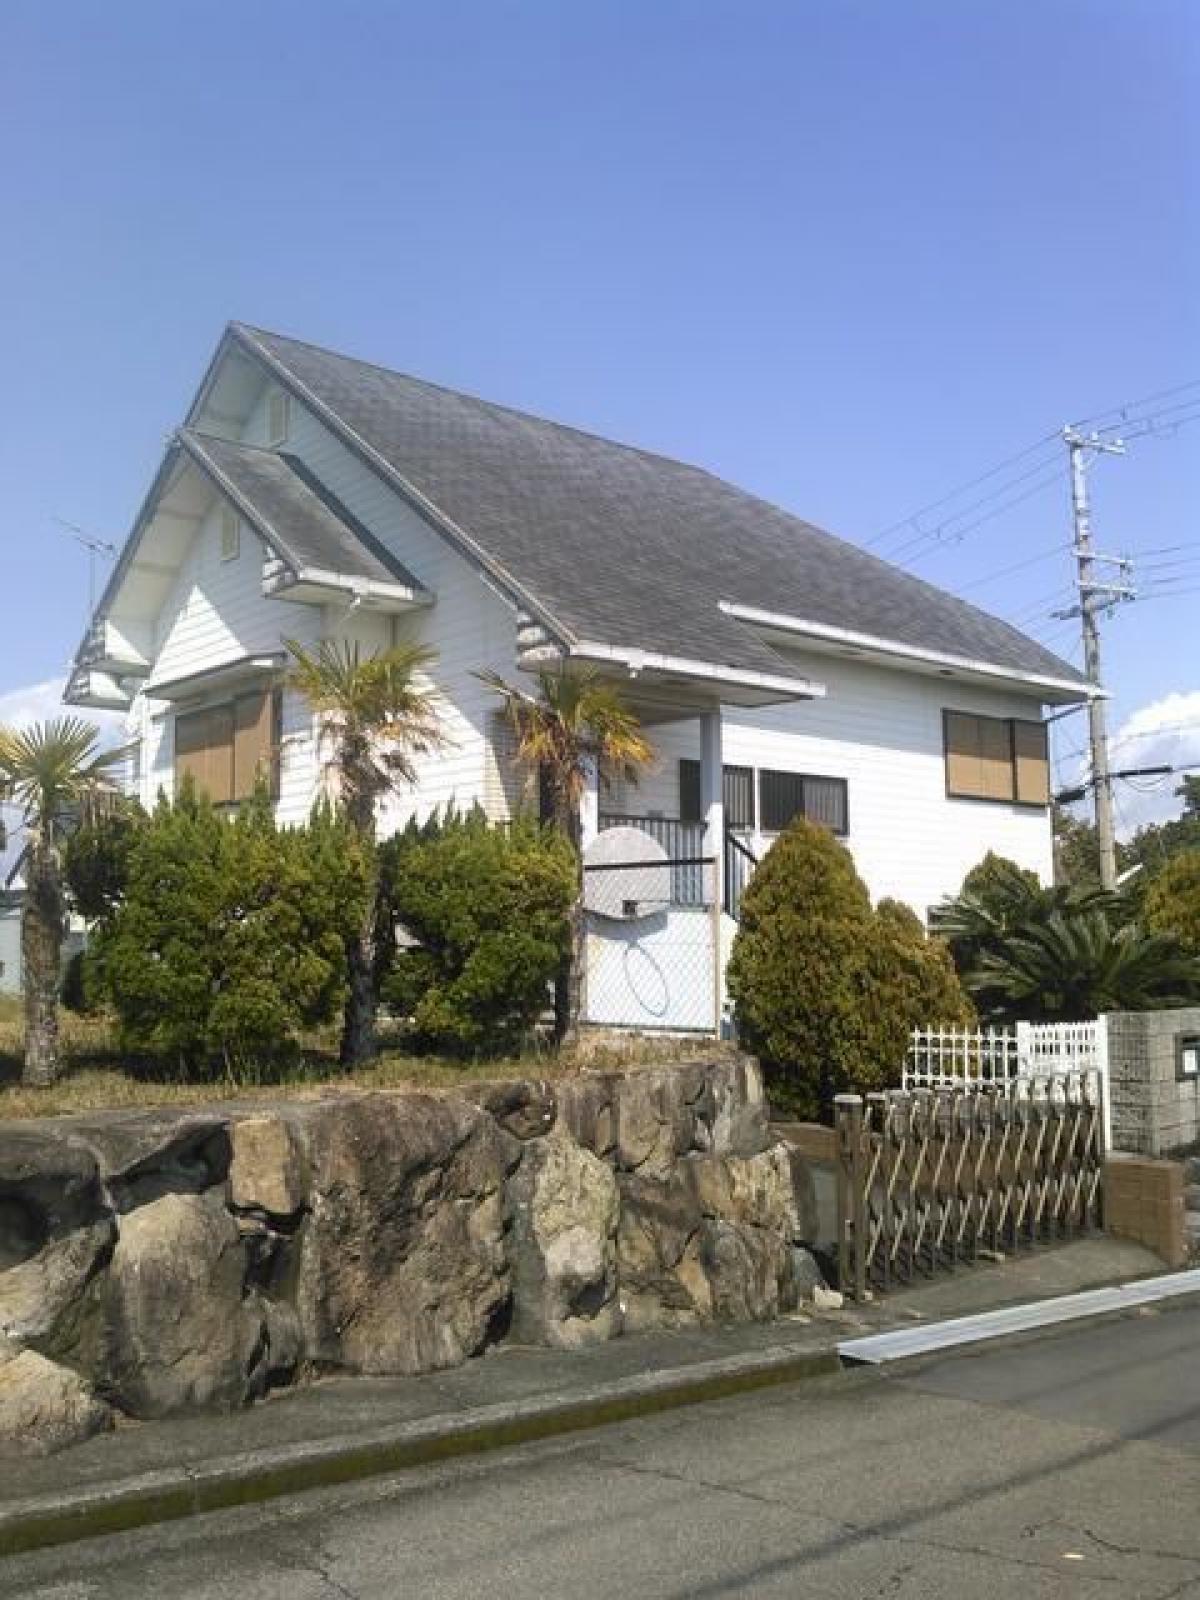 Picture of Home For Sale in Nishimuro Gun Shirahama Cho, Wakayama, Japan